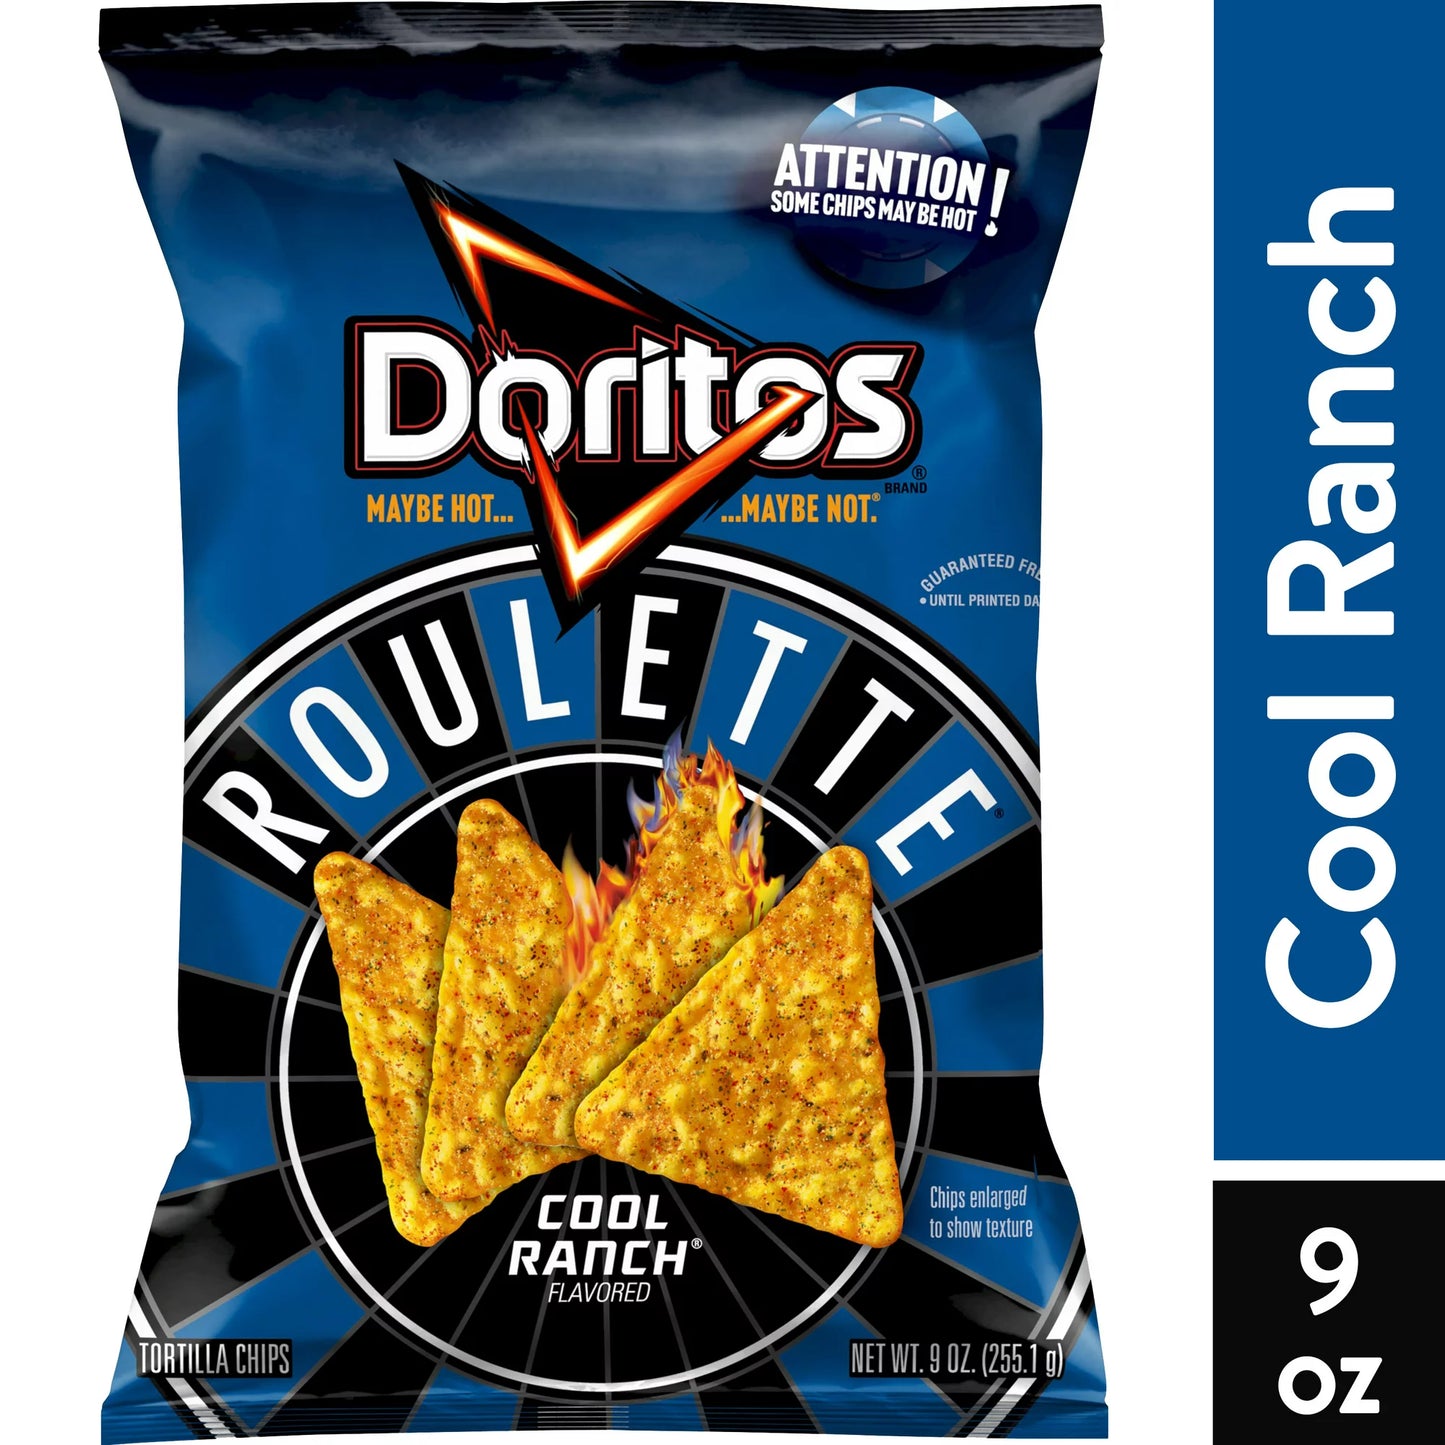 Doritos Roulette Cool Ranch Flavored Tortilla Chips, 9 oz Bag